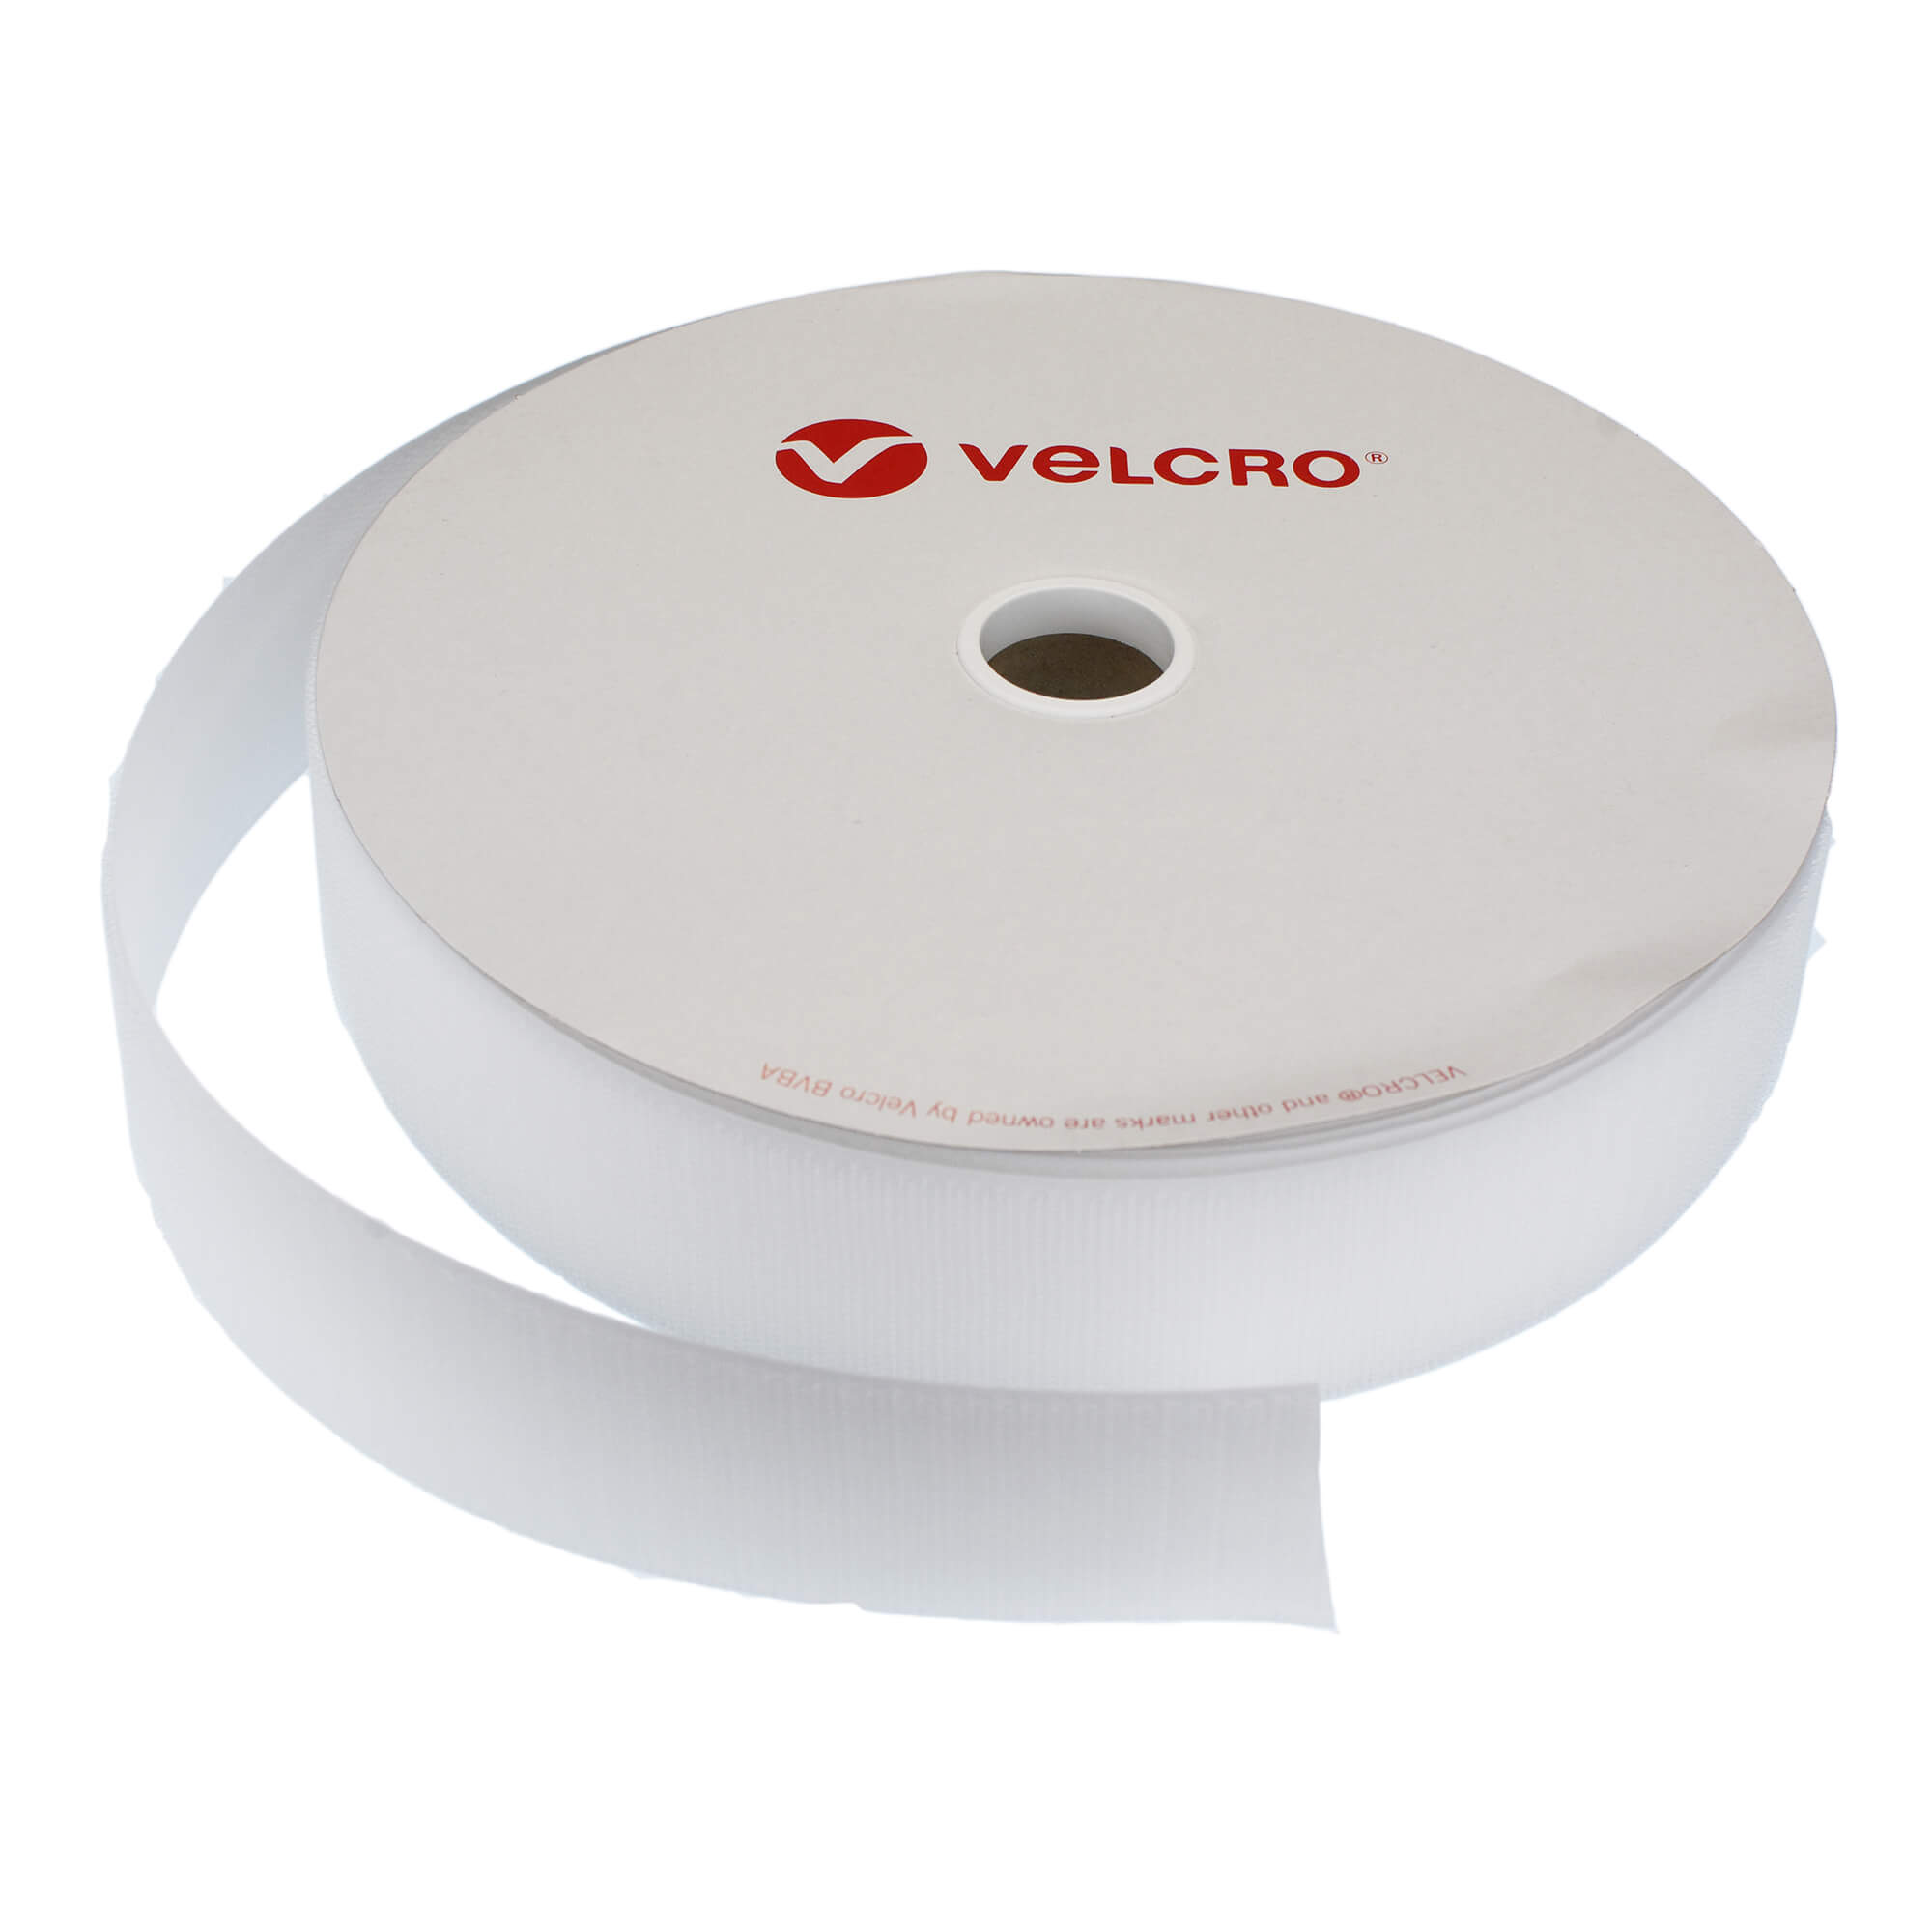 VELCRO Brand - VELCRO® Brand Heavy-Duty Stick On Tape 50mm x 5m White